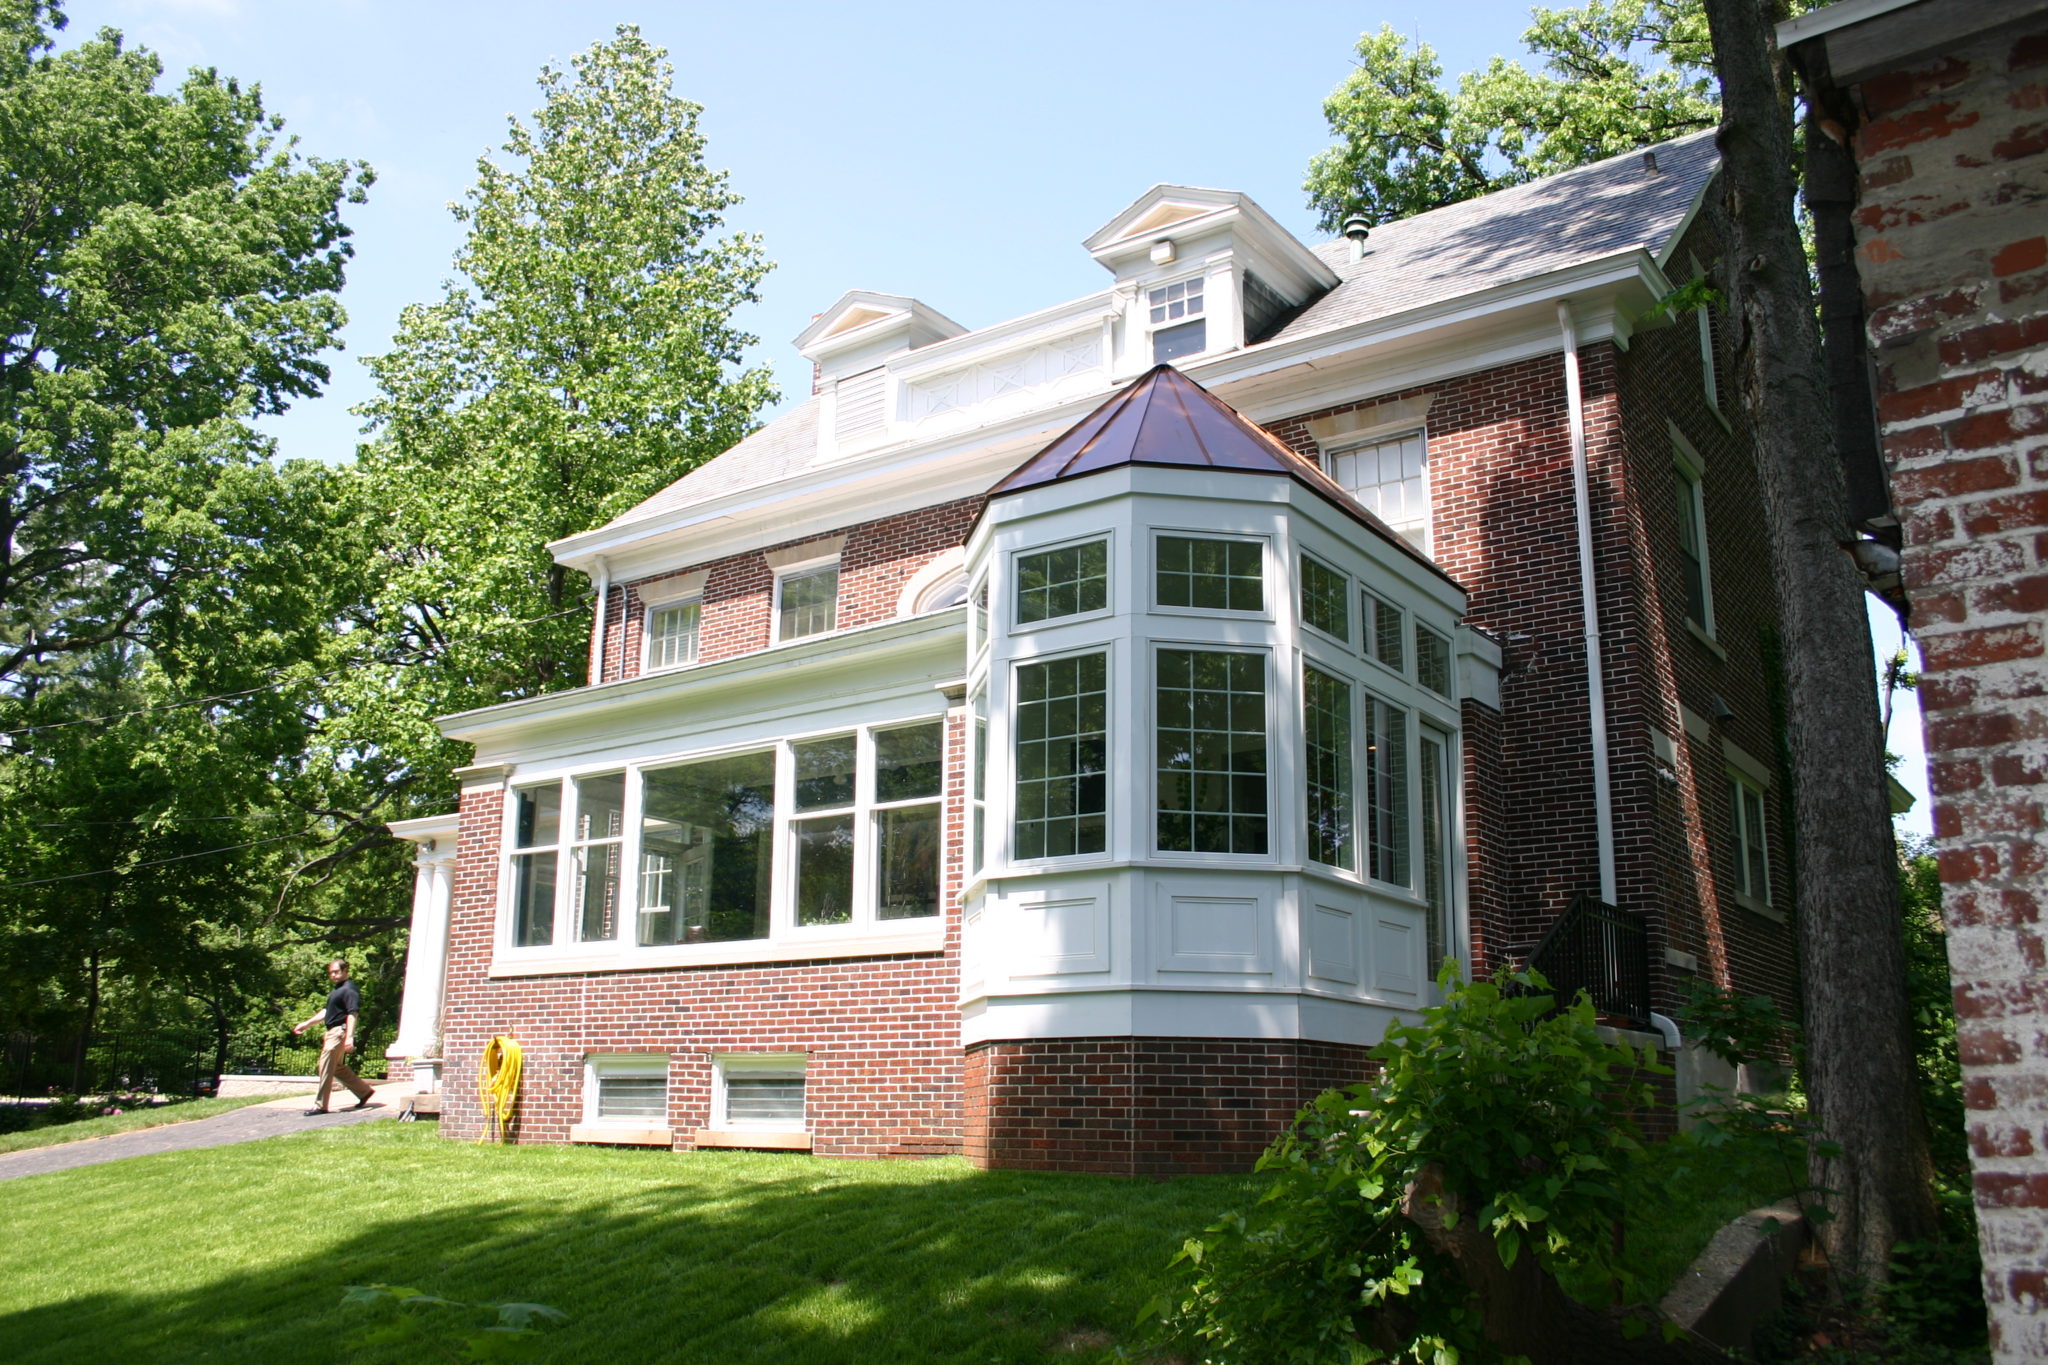 Solarium Addition on Historic Home